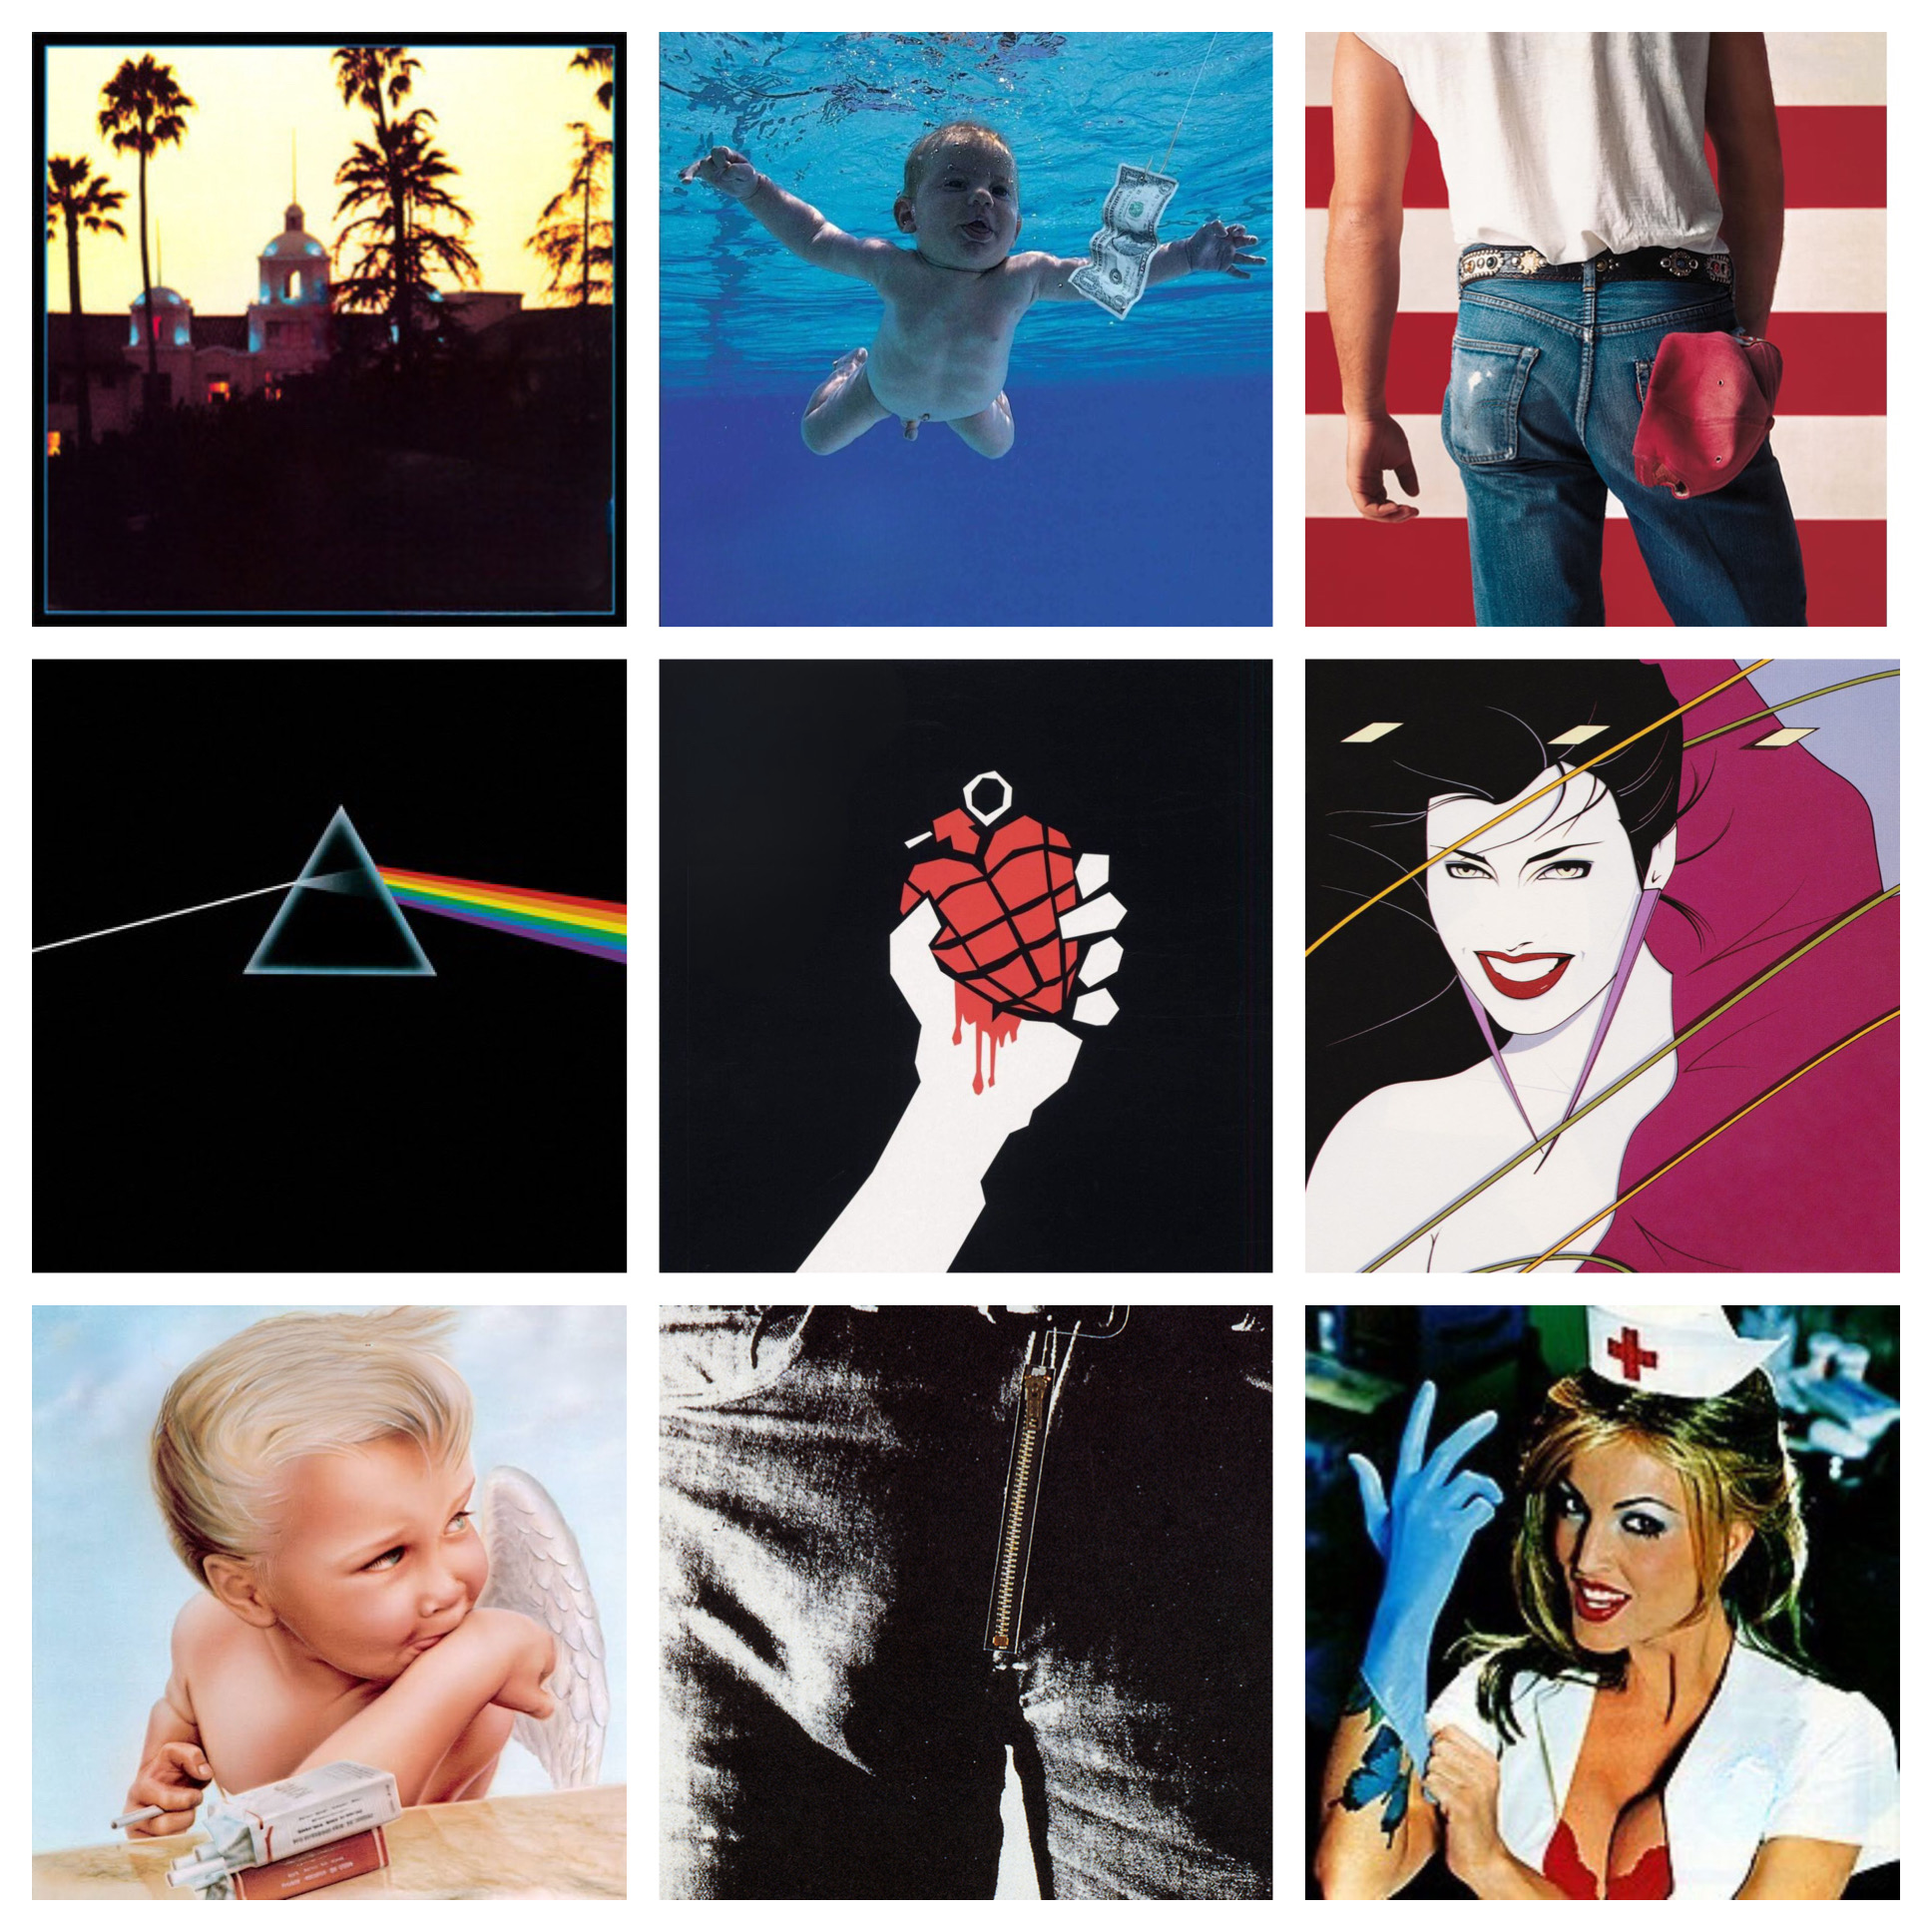 Iconic Rock Albums